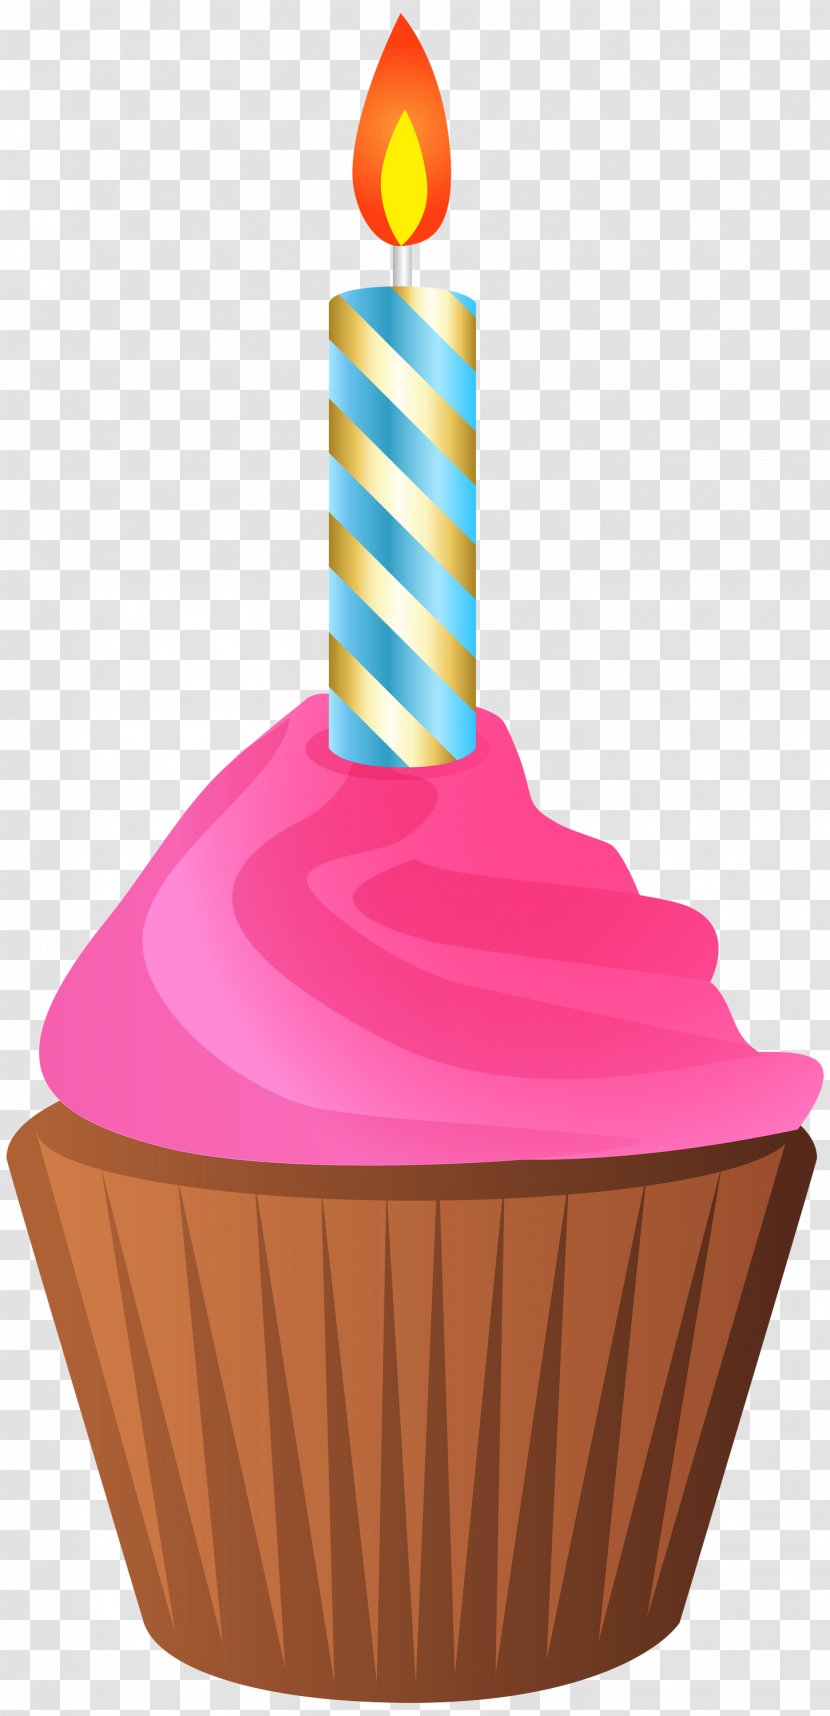 Birthday Candle - Cupcake Cake Transparent PNG